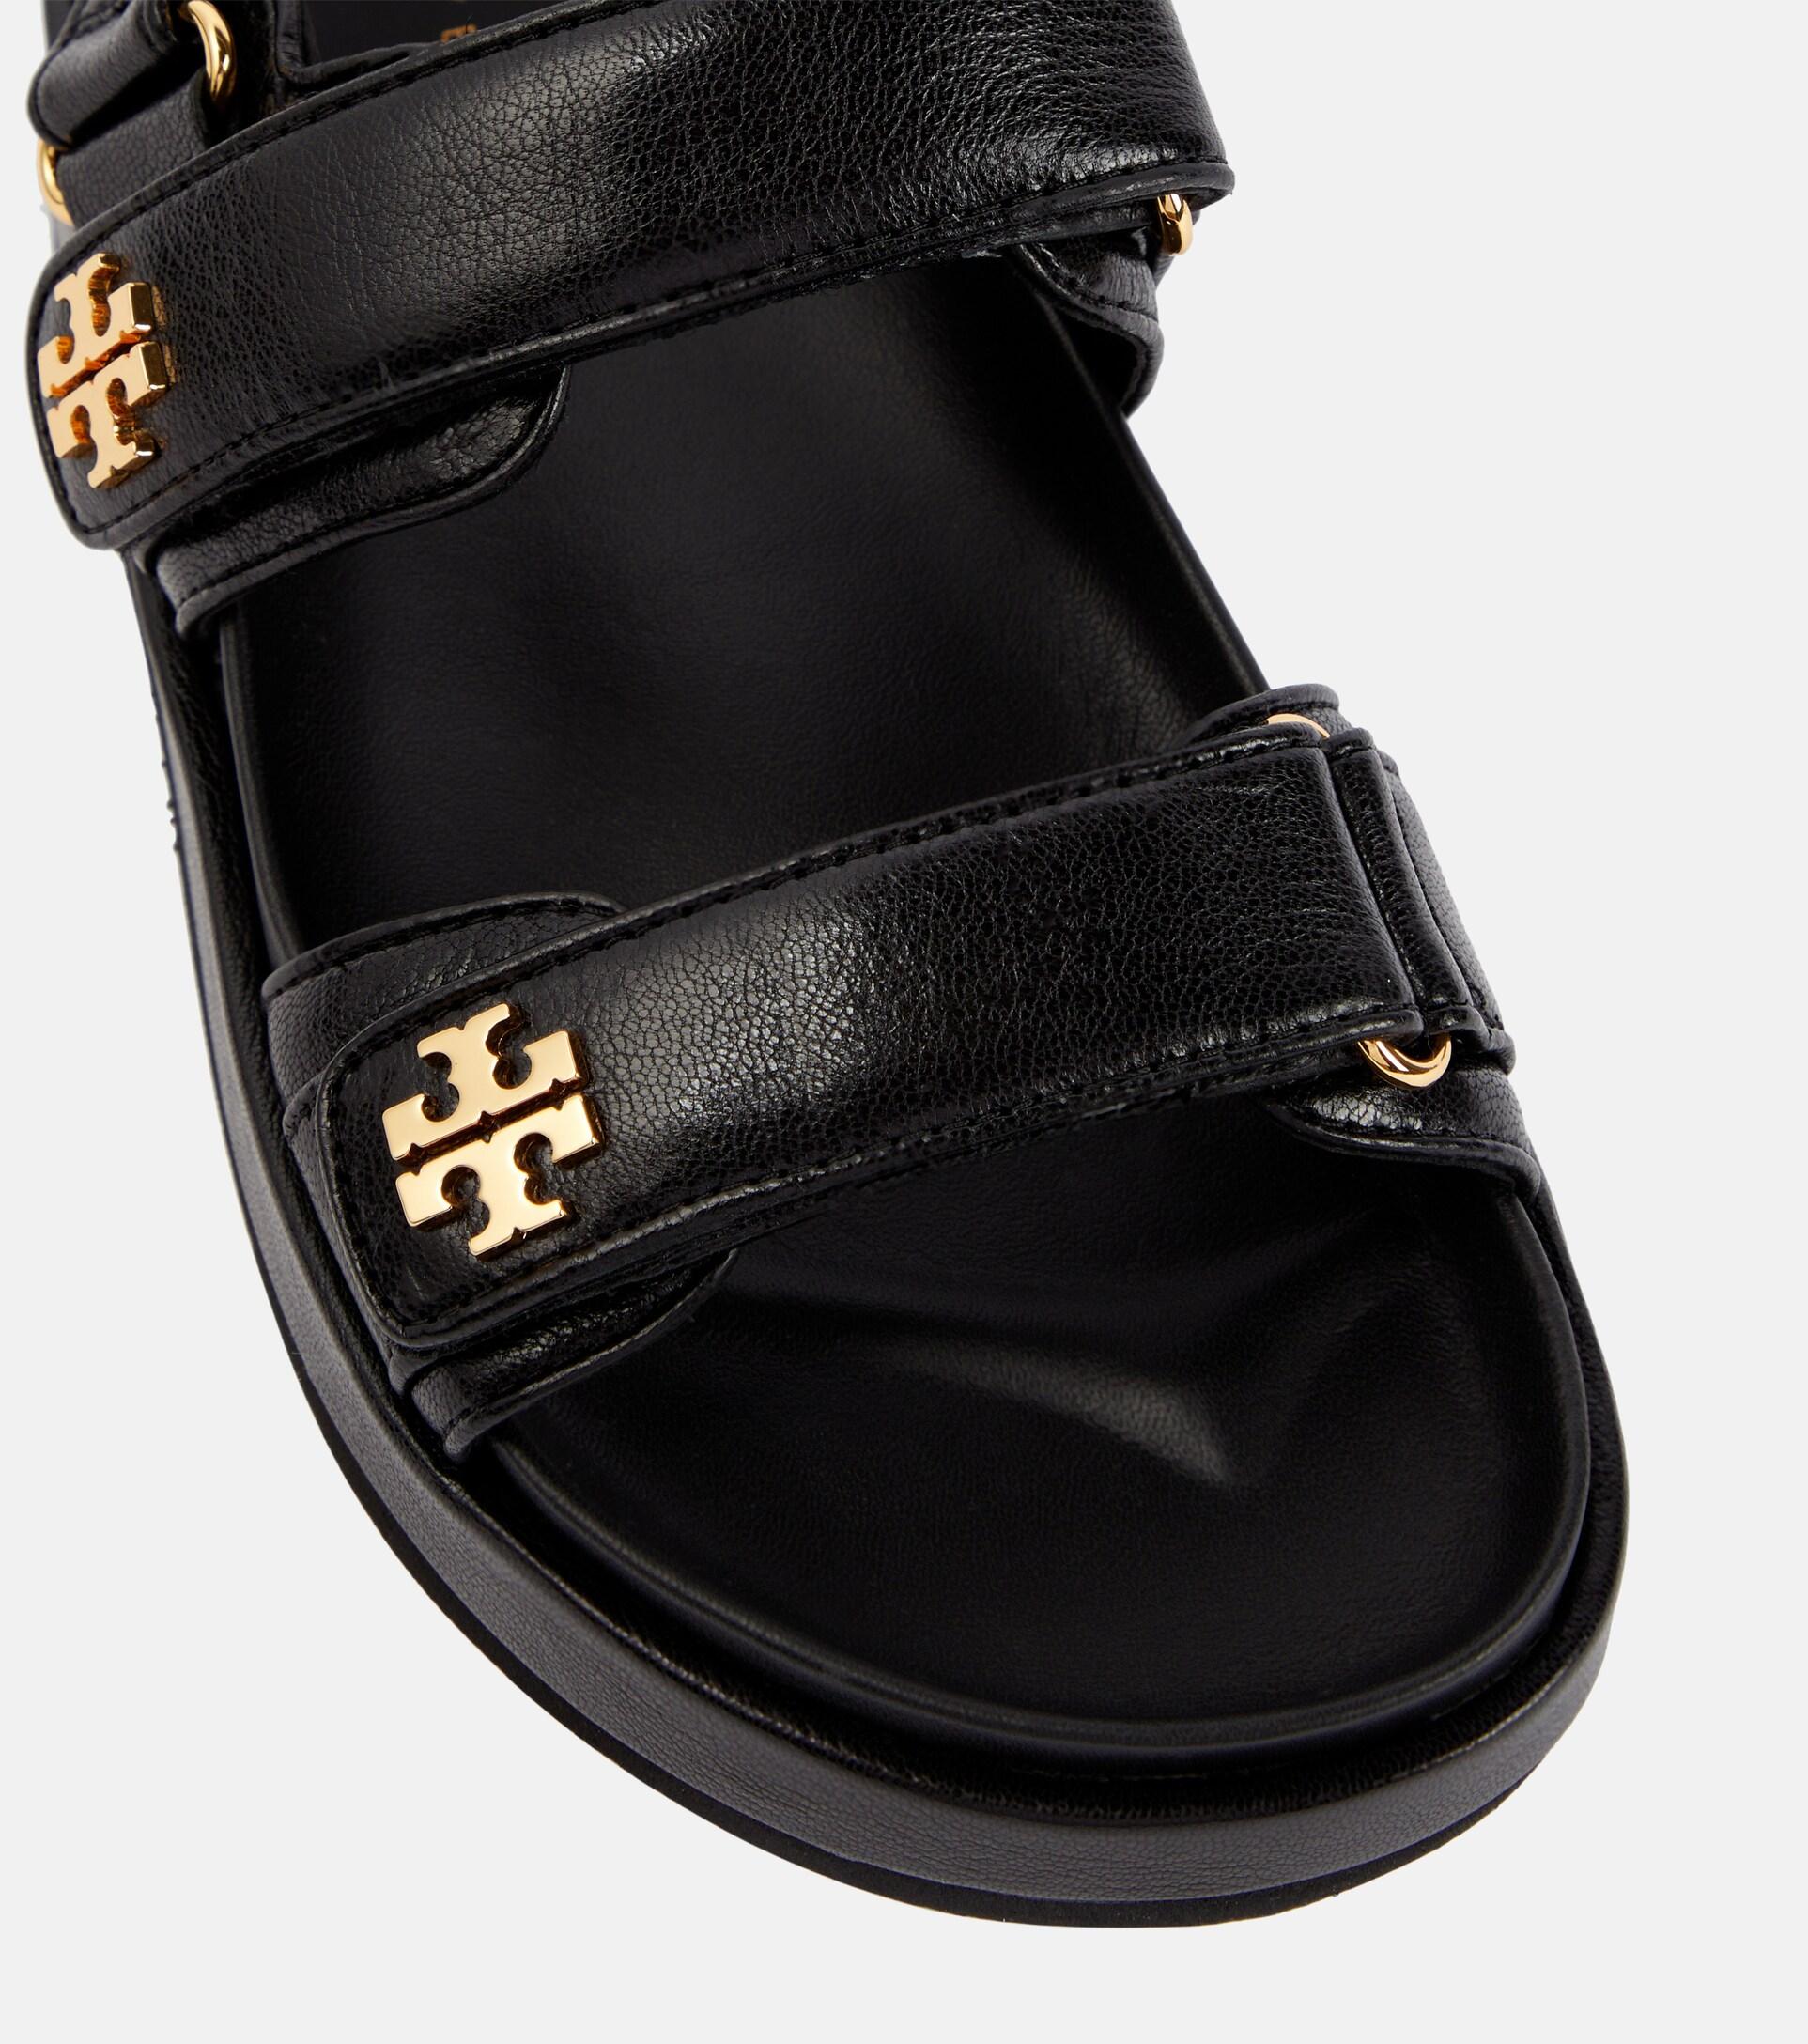 Tory Burch Kira Sport Leather Sandals in Black